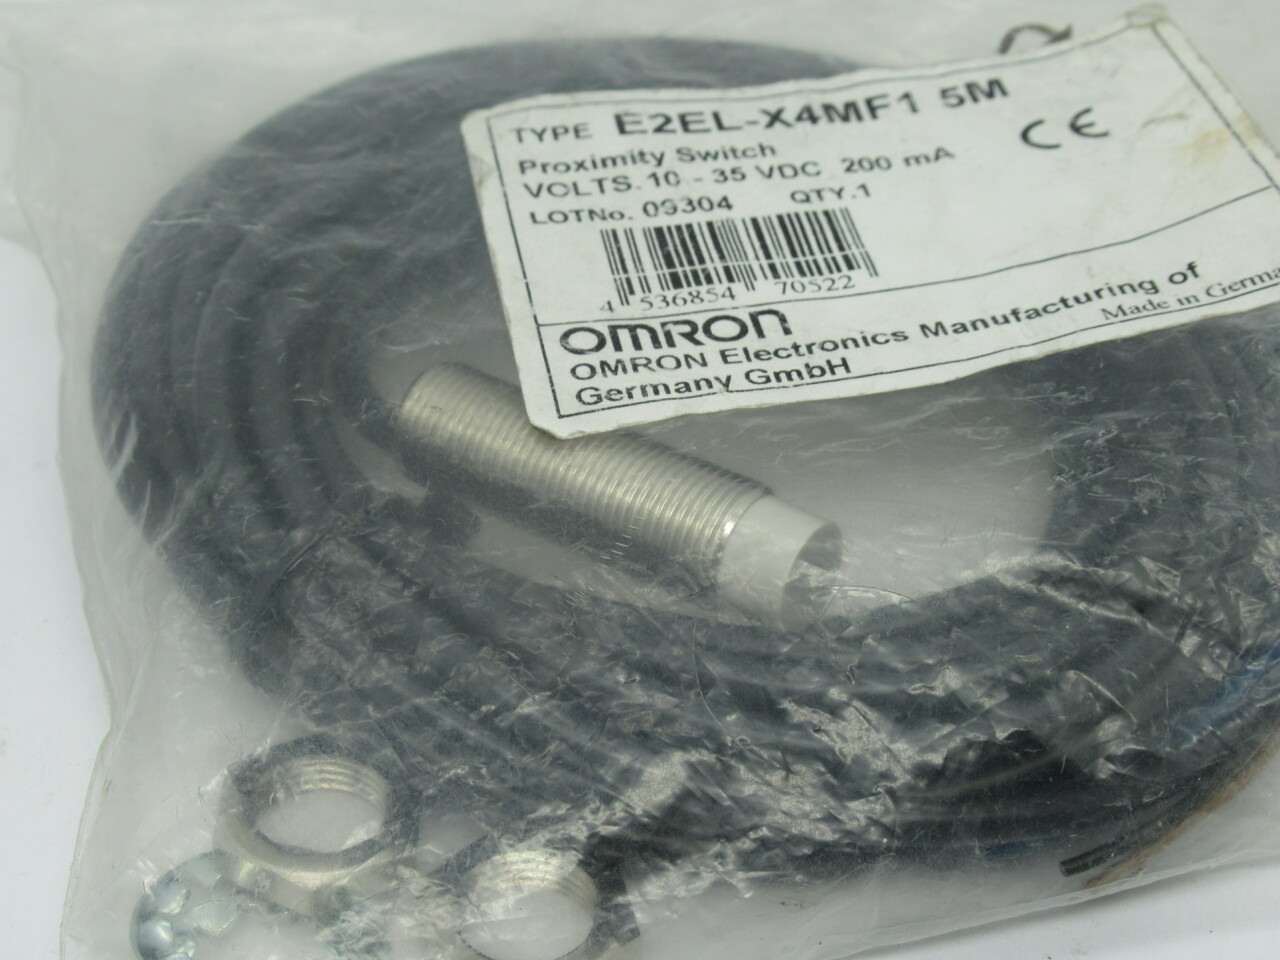 Omron E2EL-X4MF1-5M Proximity Switch 10-35VDC 200mA Cable 5m NWB